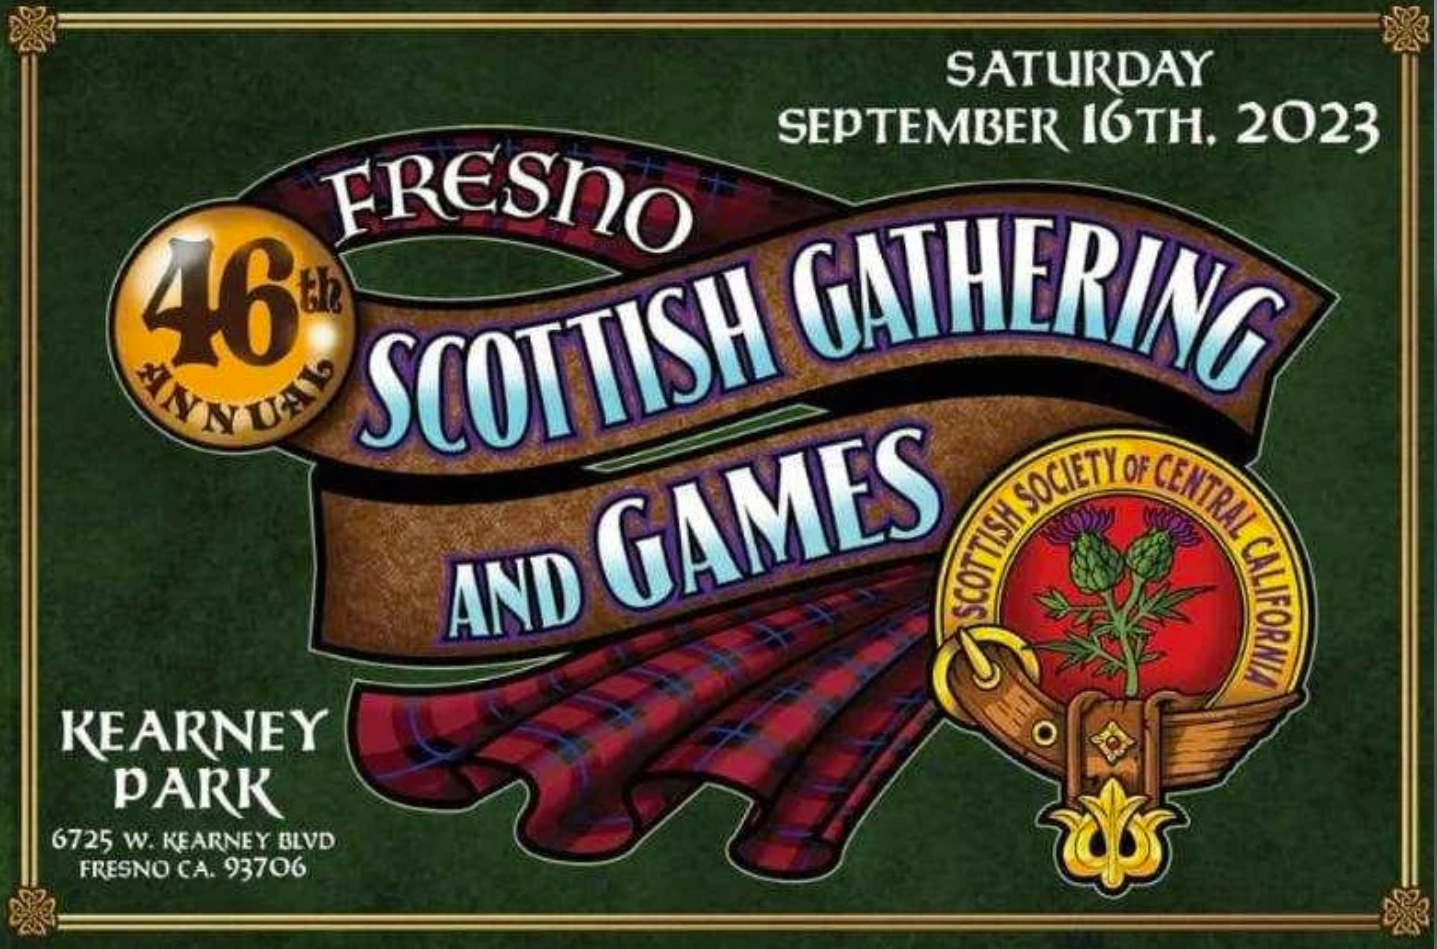 46th Scottish Gathering & Games